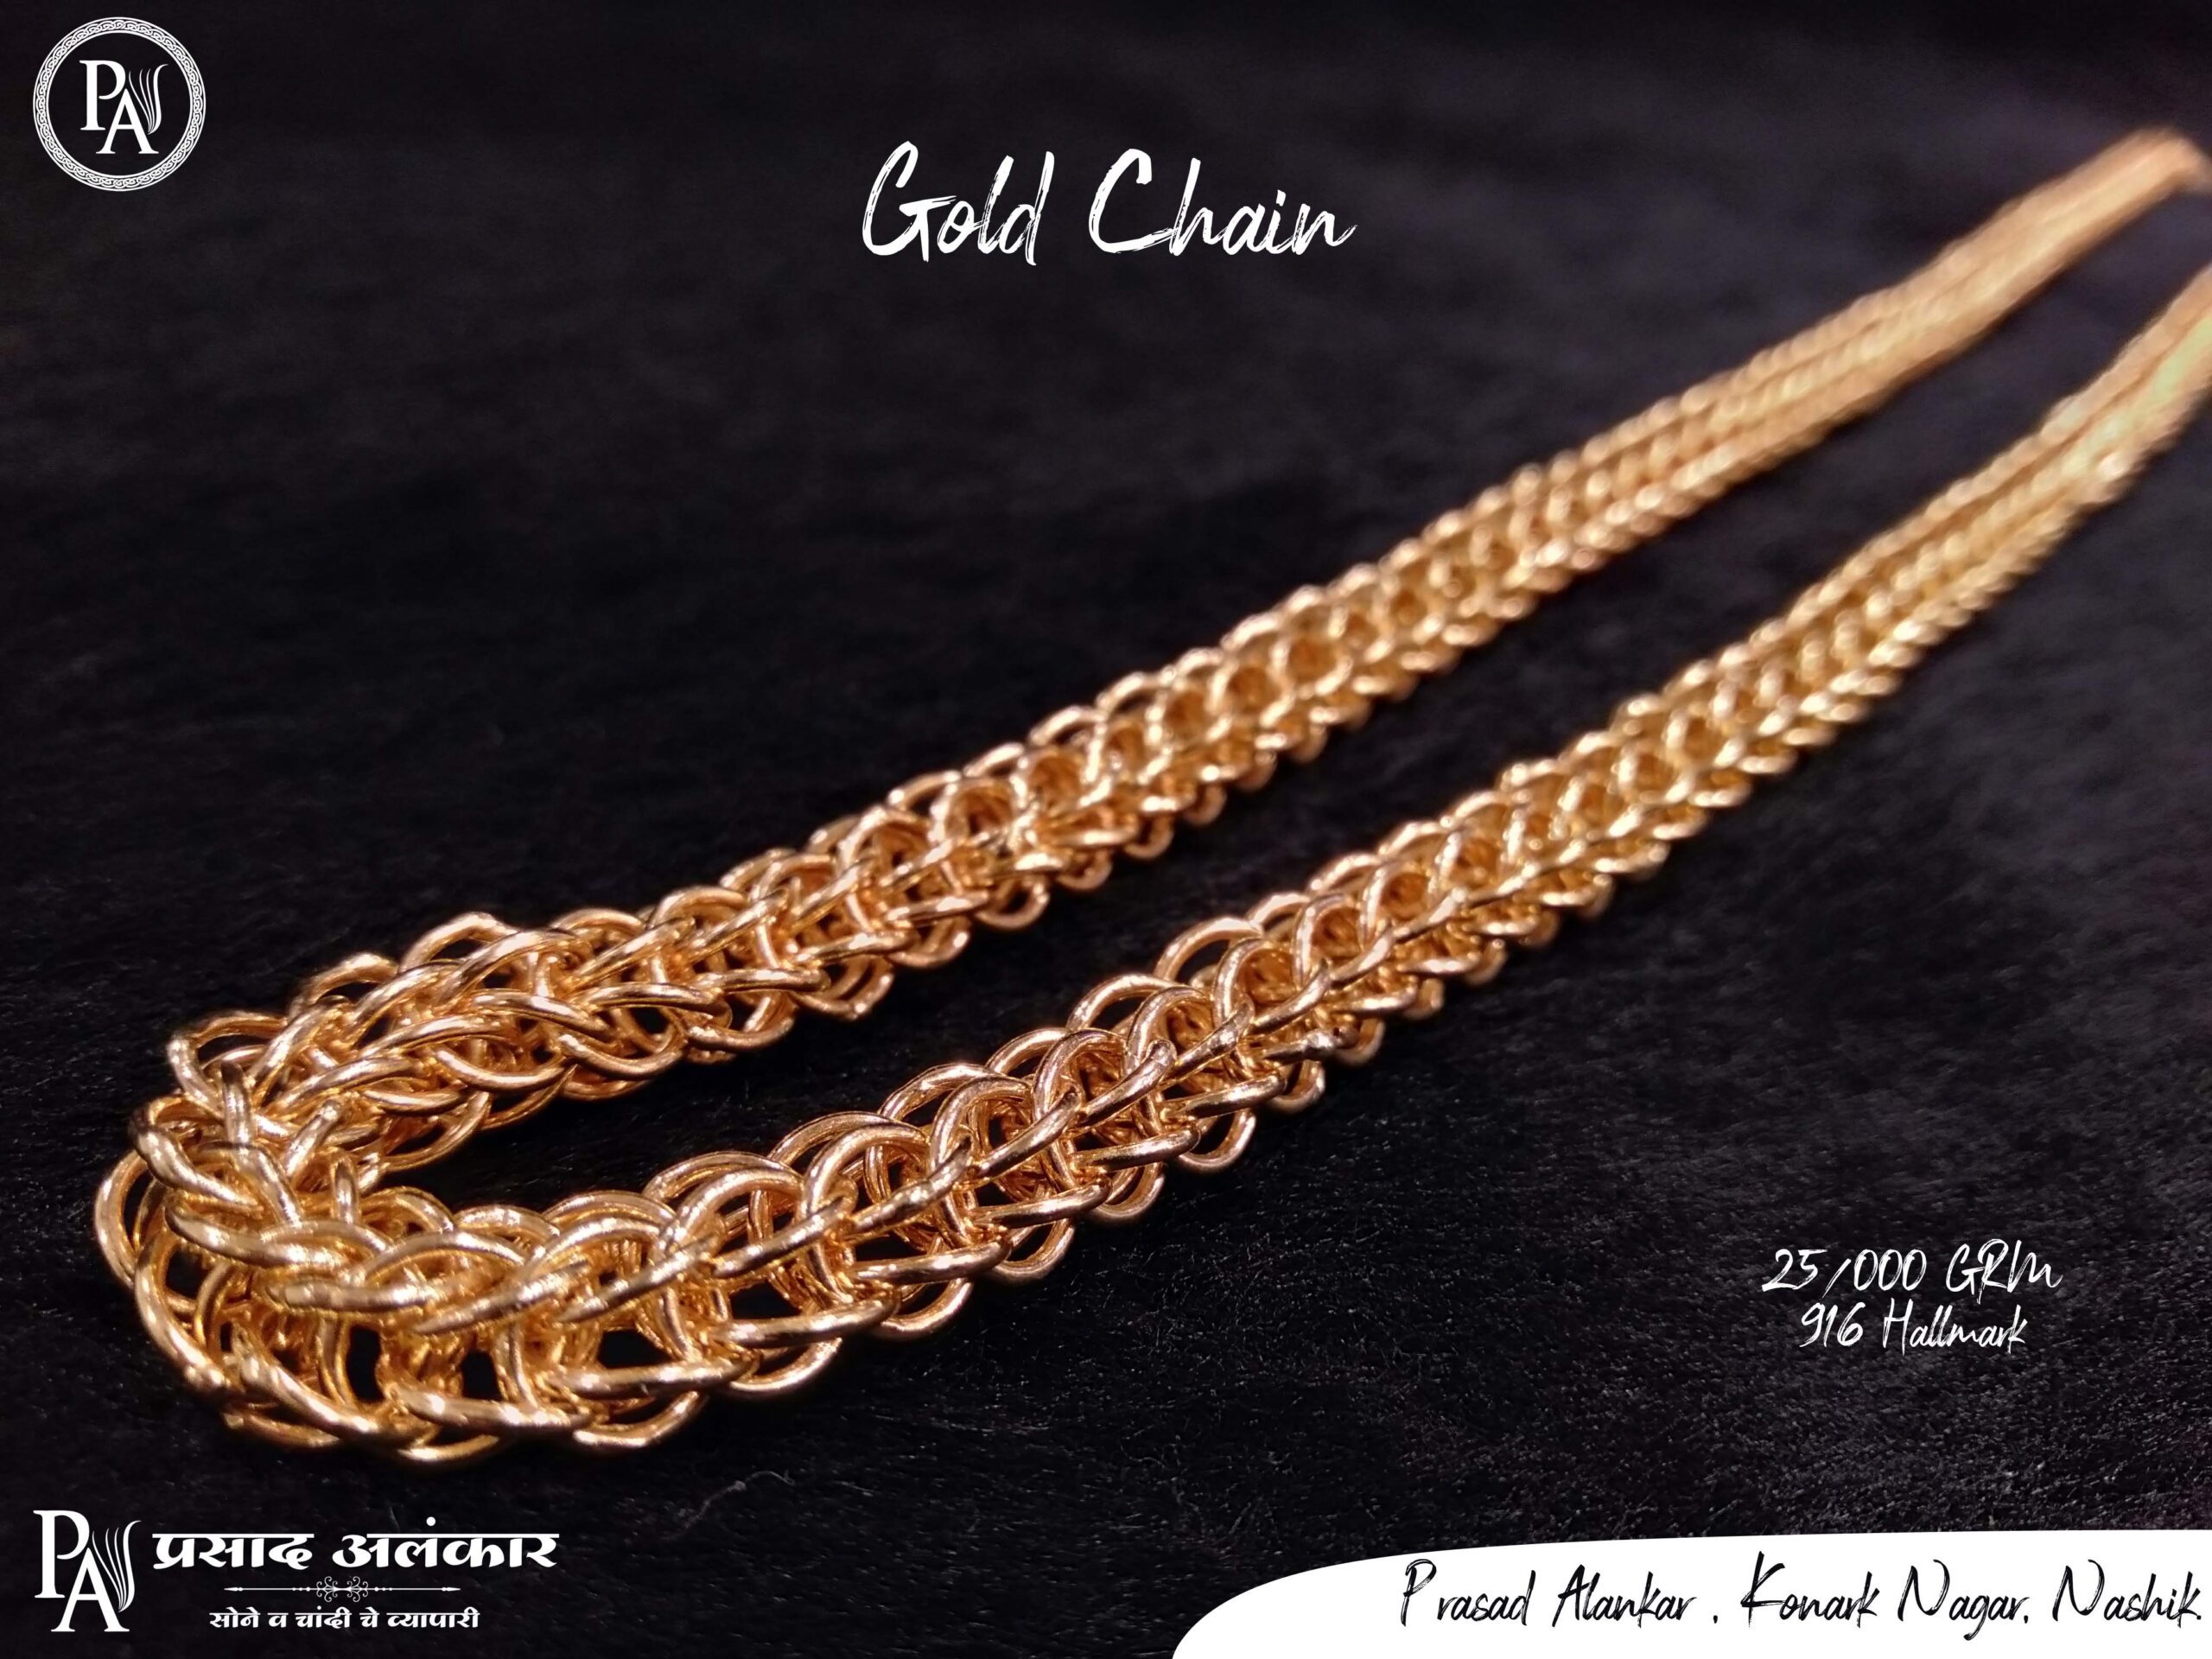 Daily use gold chain, gold chain under 25 grams, gold chain under 50 grams, heavy gold chain, gold chain for men, prasad alankar, jewellery shop nashik